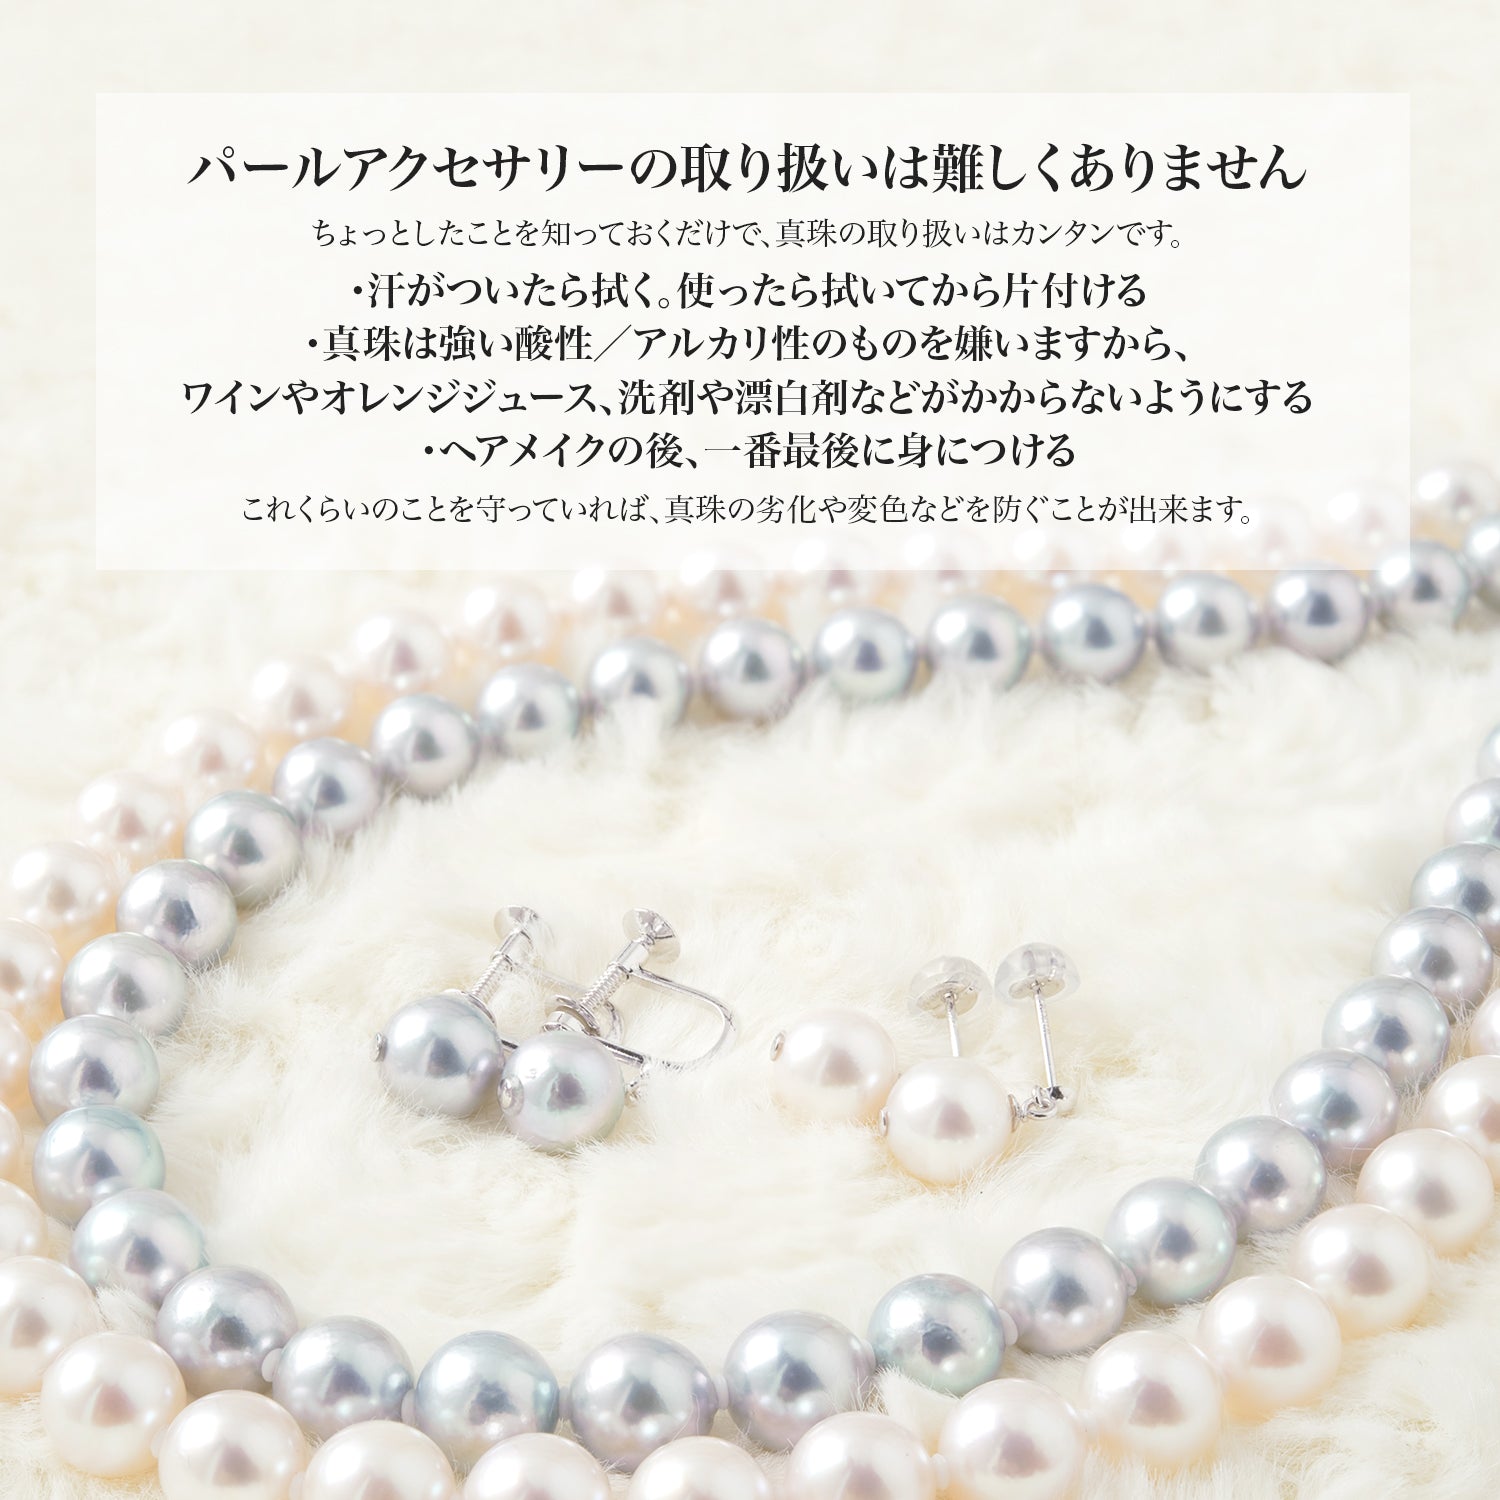 Pearl station chain 1 piece bracelet white 6.0-6.5mm SV925 Akoya pearl dangling (3923)